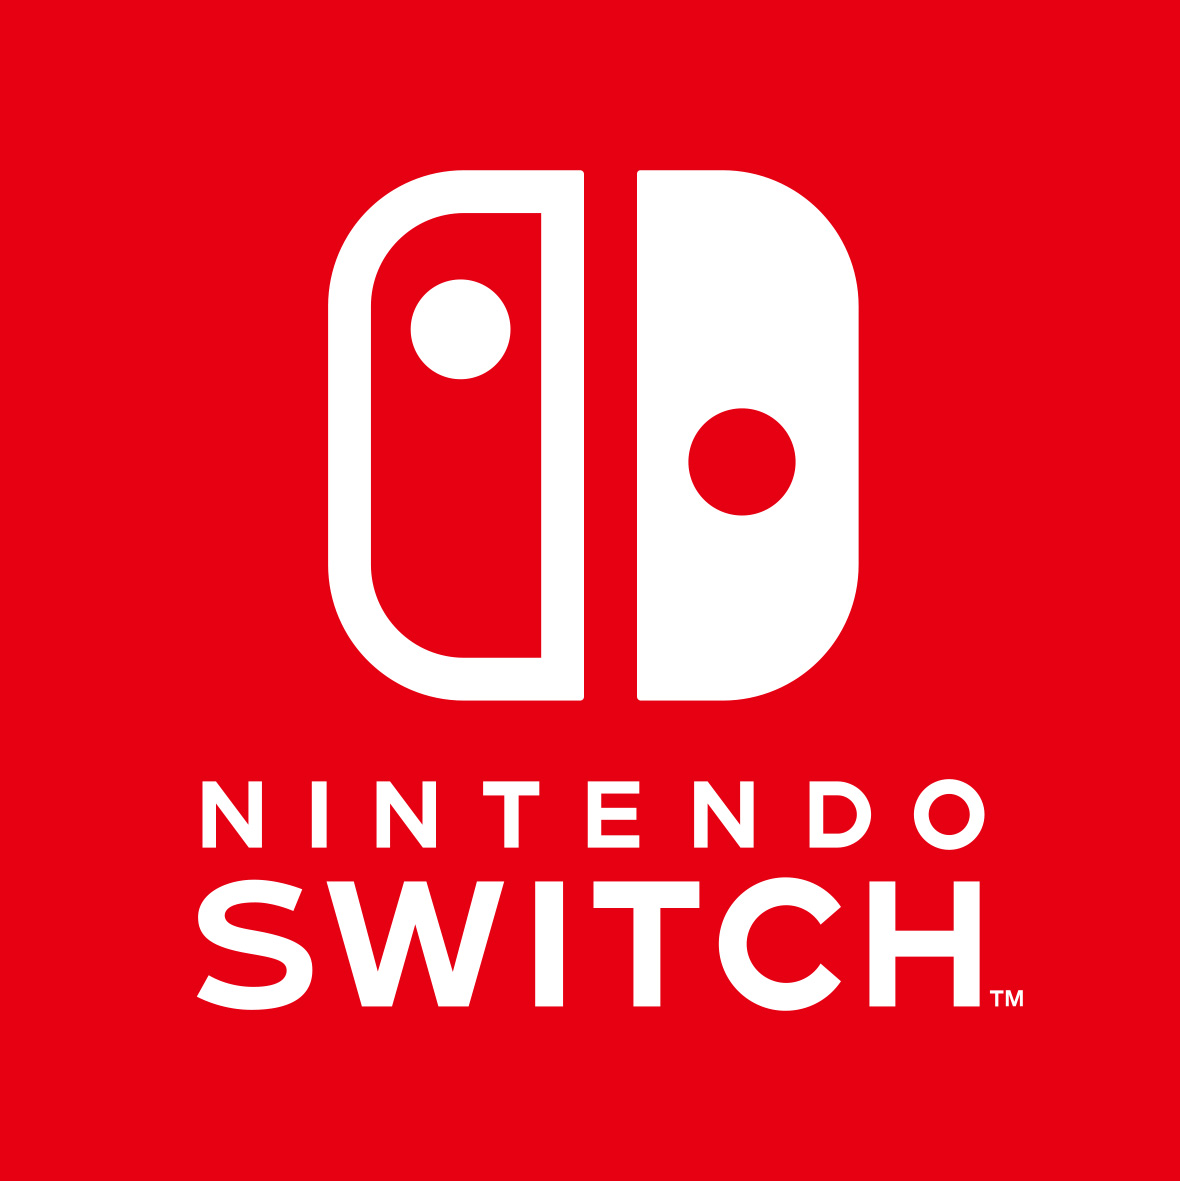 Nintendo Switch TV spots hit Japan